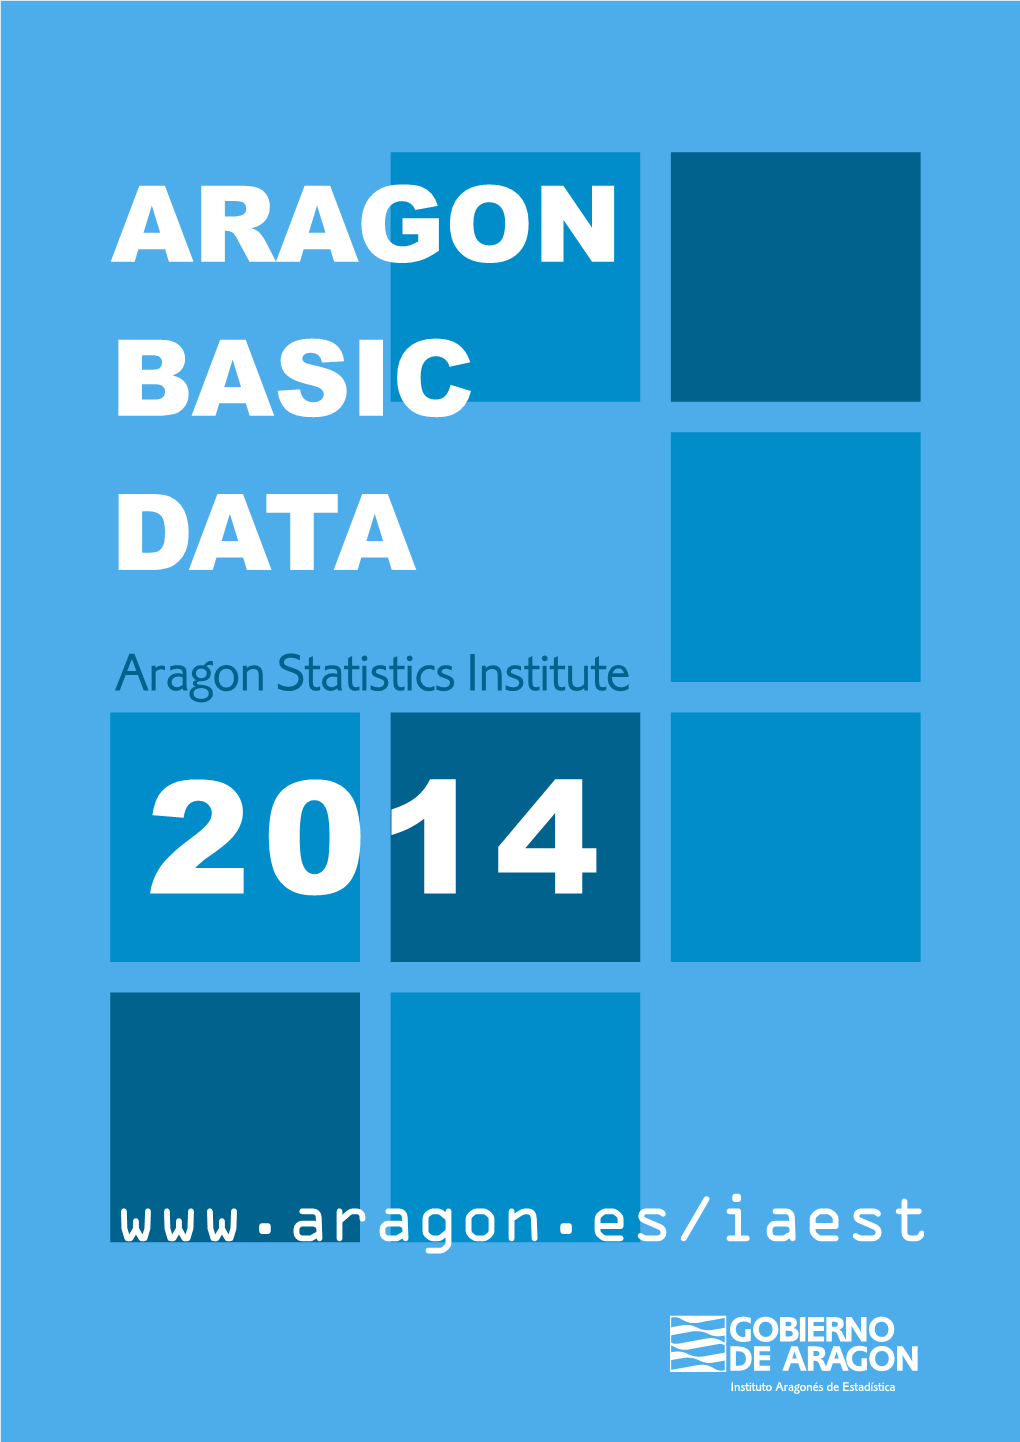 Aragon Basic Data, 2014